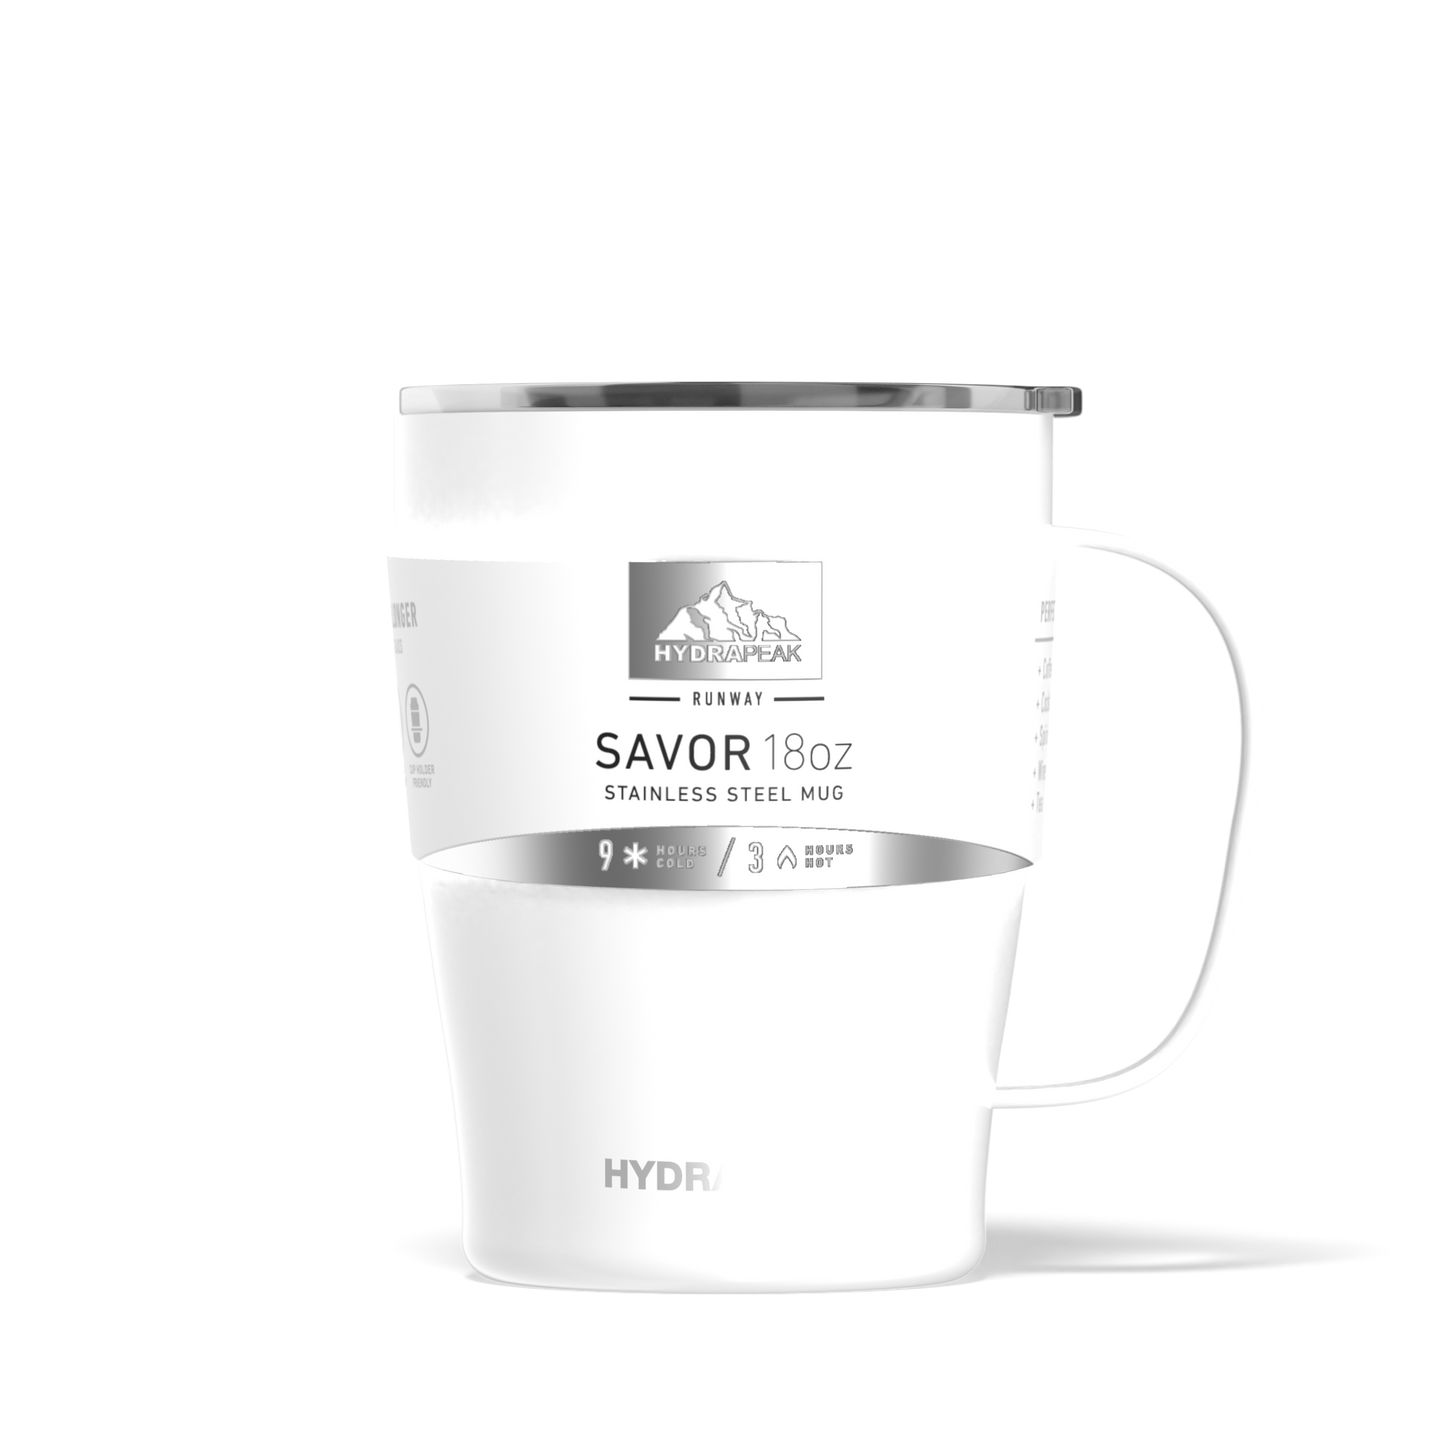 SAVOR 18oz Stainless Steel Insulated Travel Mug - White